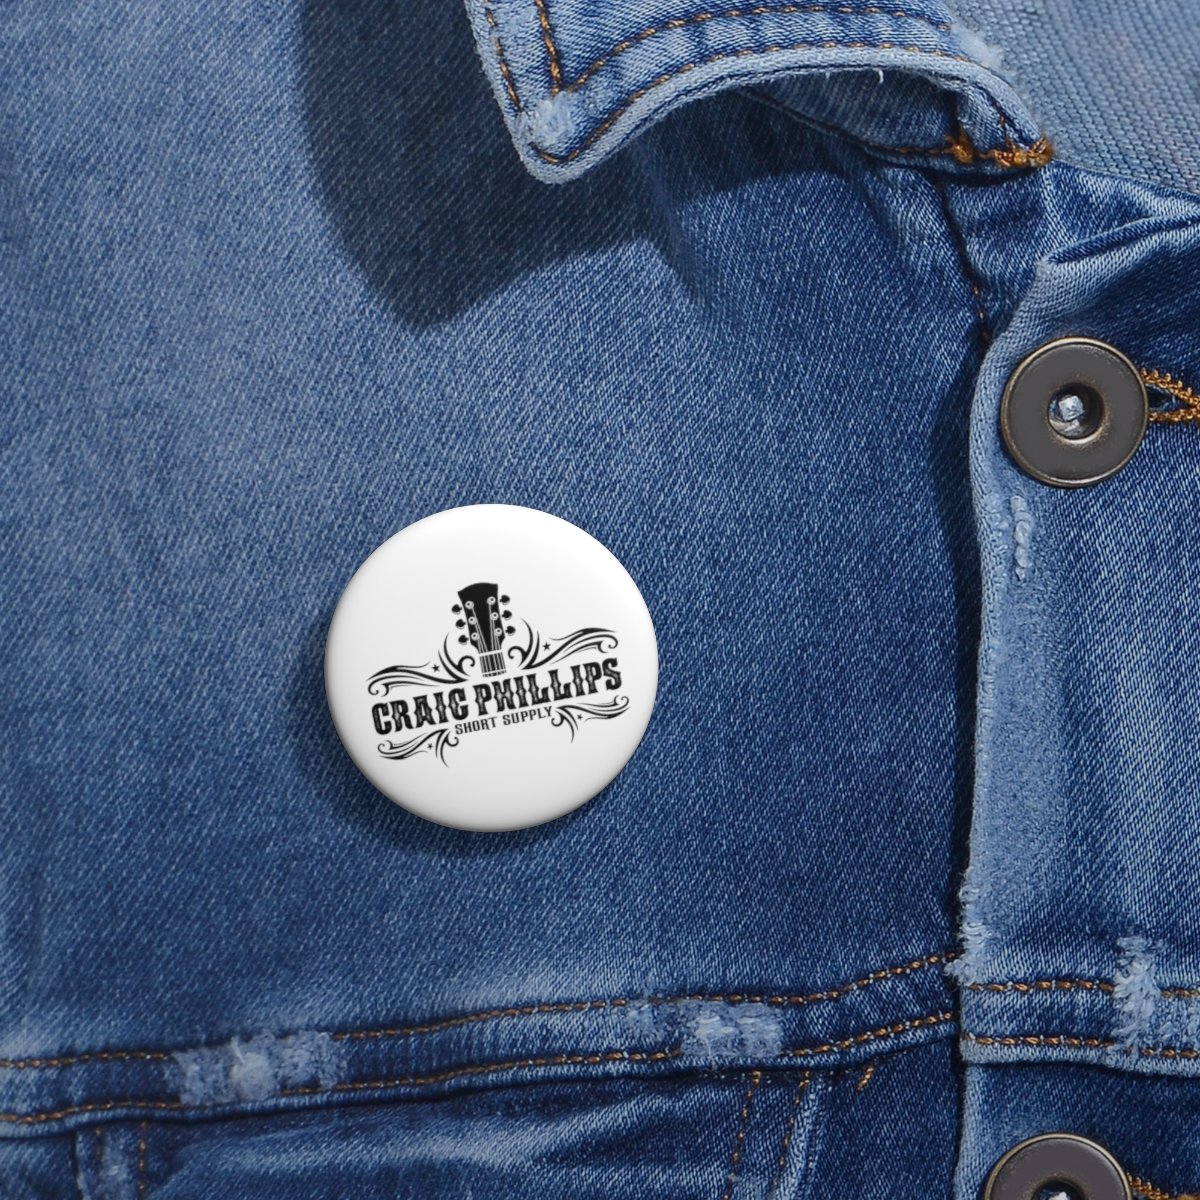 Craig Phillips – Short Supply Black Logo Magazine Pin Buttons